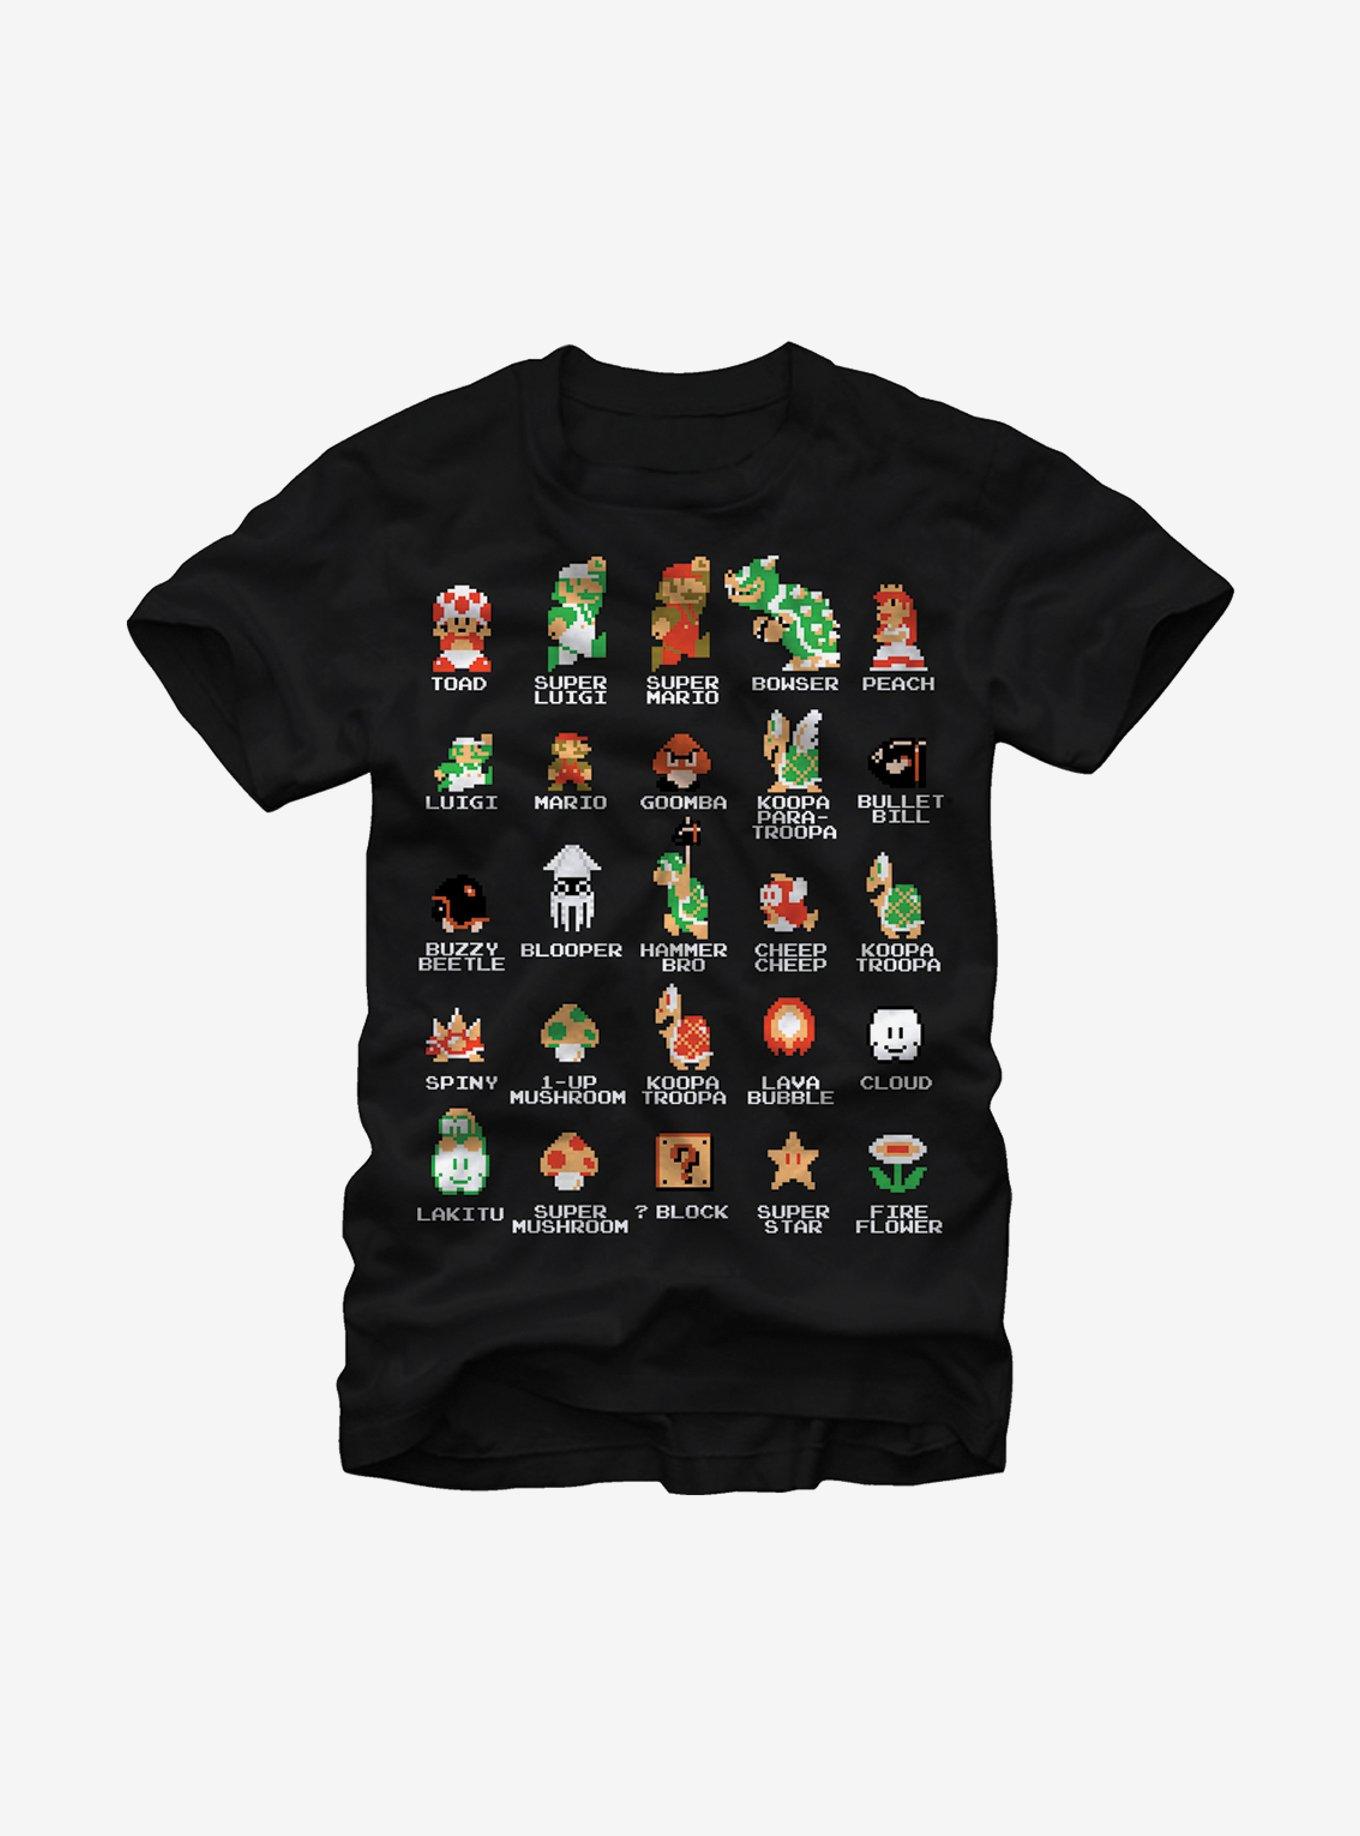 Nintendo Super Mario Bros Character Guide T-Shirt